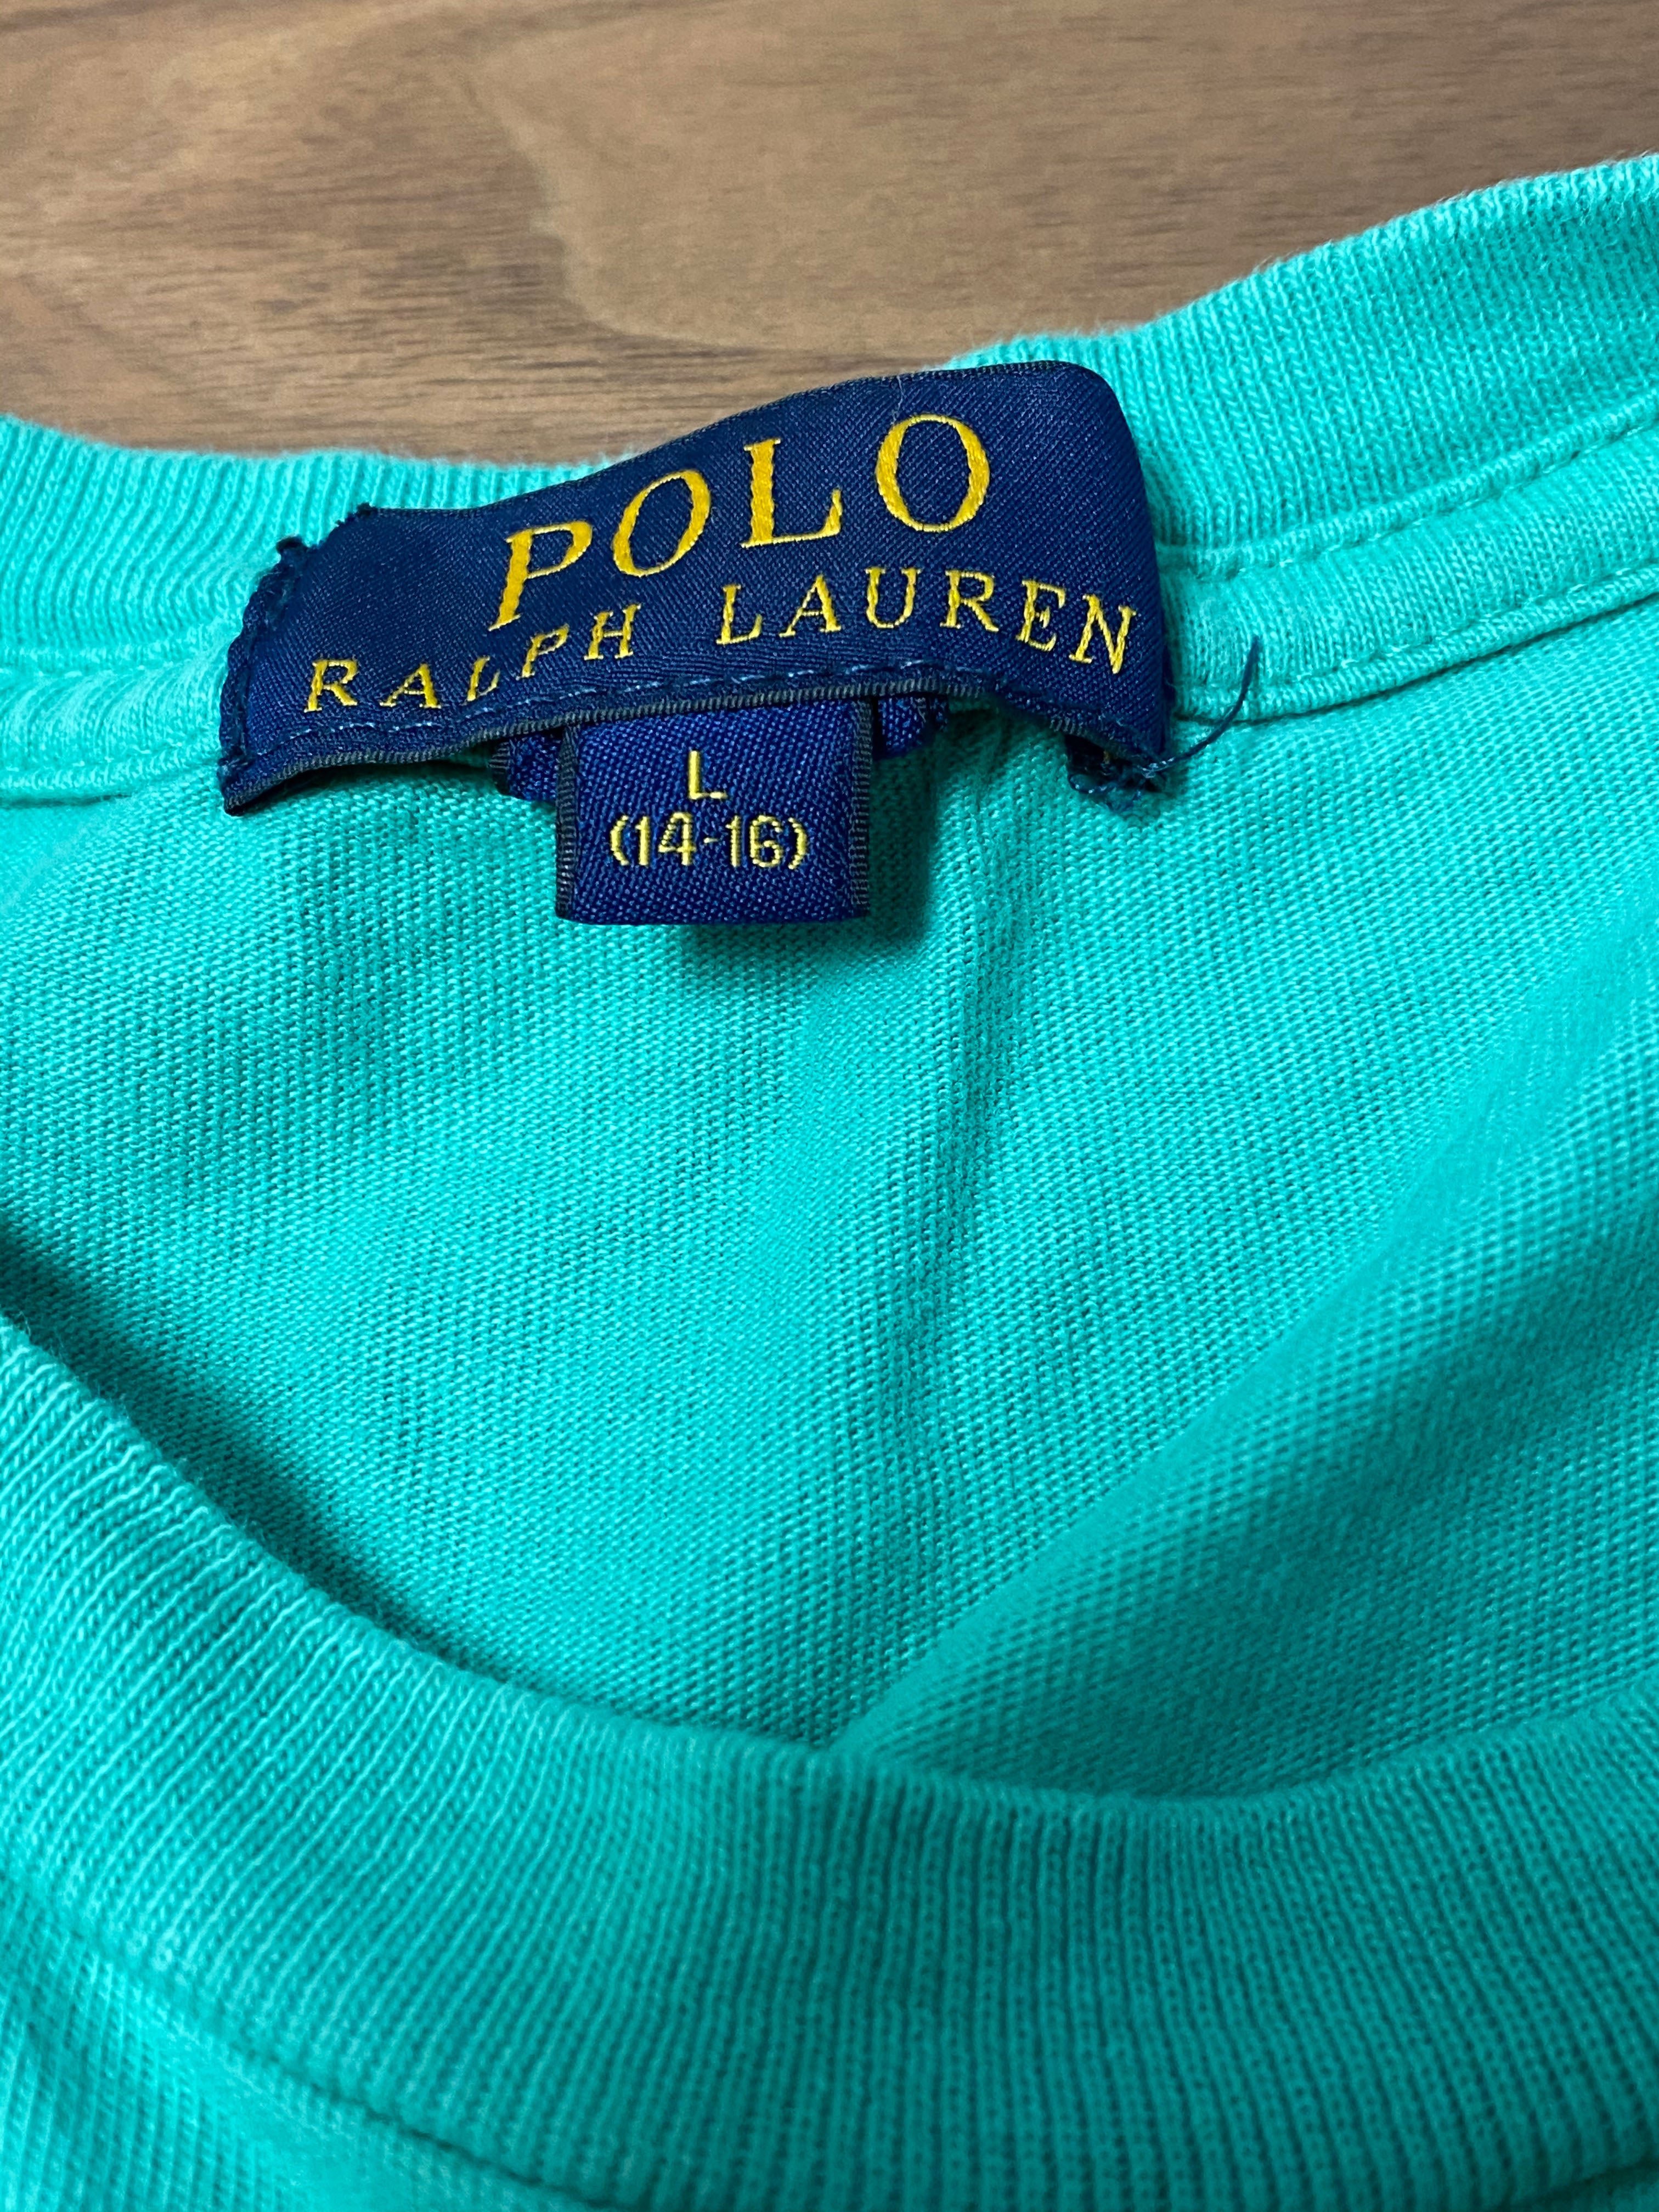 Polo by Ralph Lauren Basic Tee Size 14-16 - Seafoam